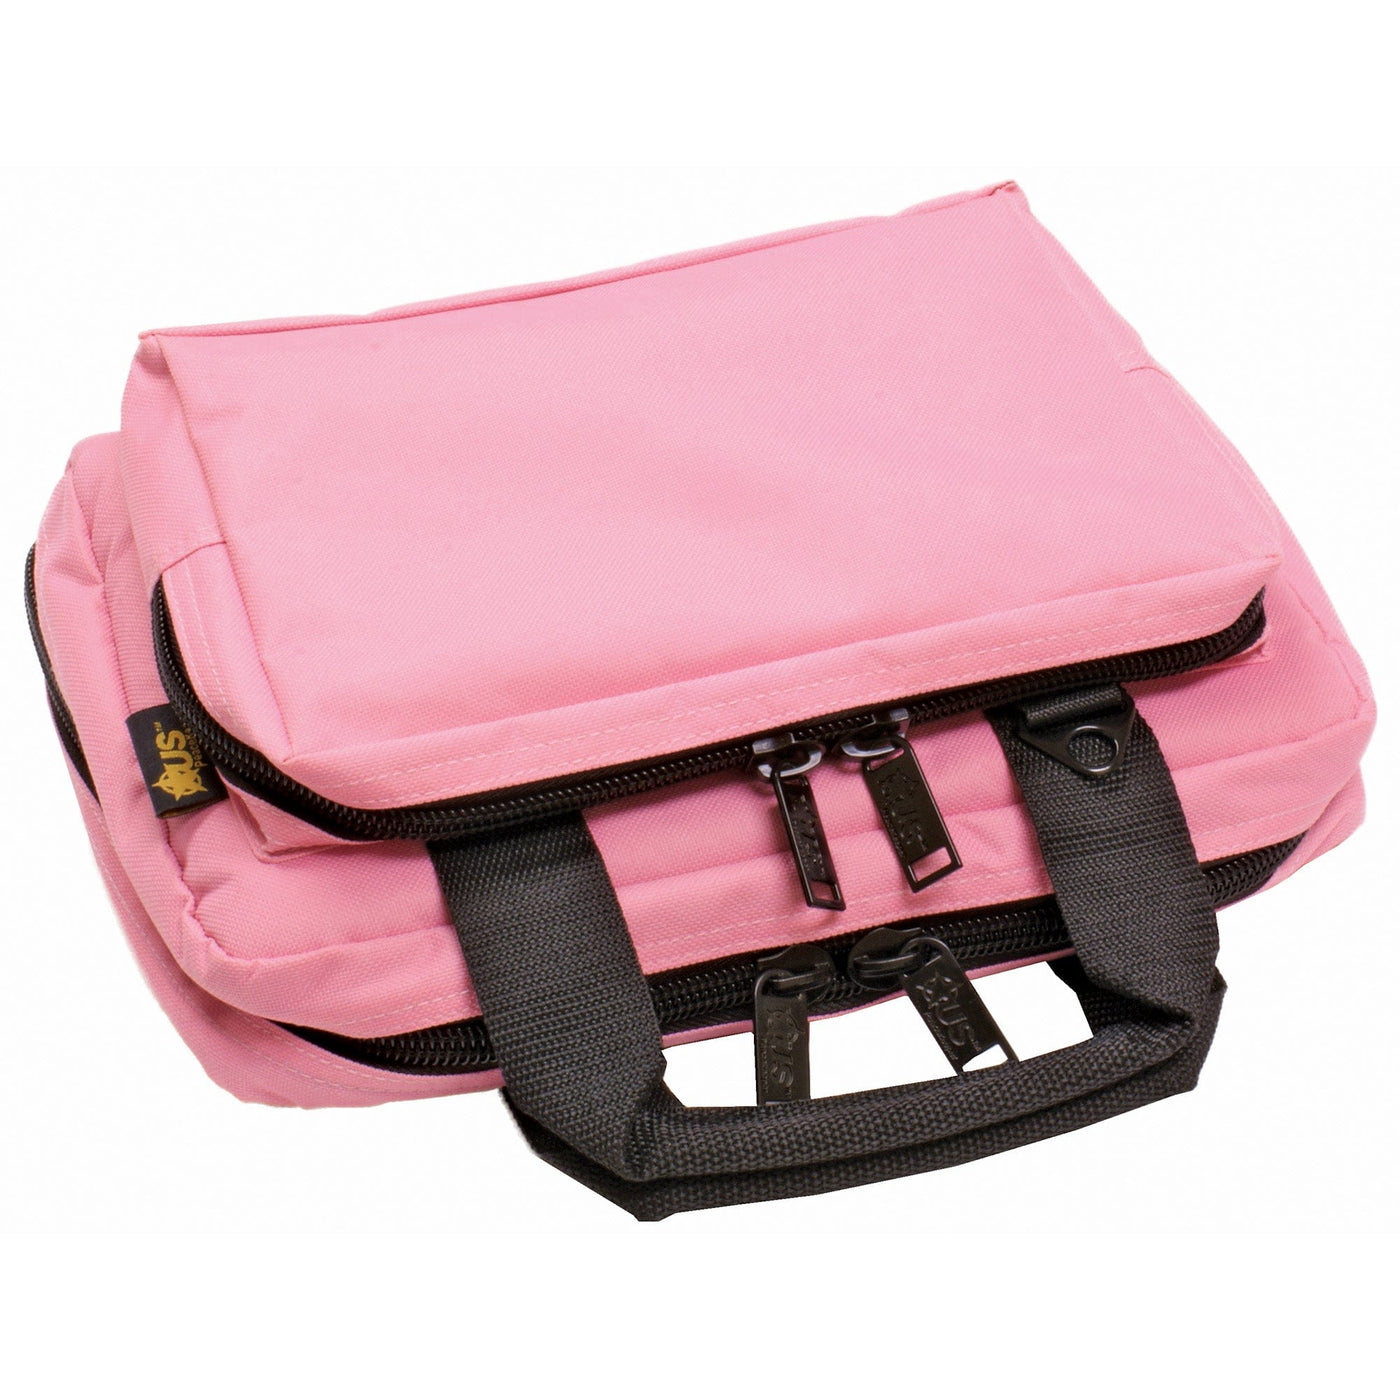 US PeaceKeeper Us Peacekeeper Mini Range Bag - W/8-magazine Holders Pink Pink Soft Gun Cases